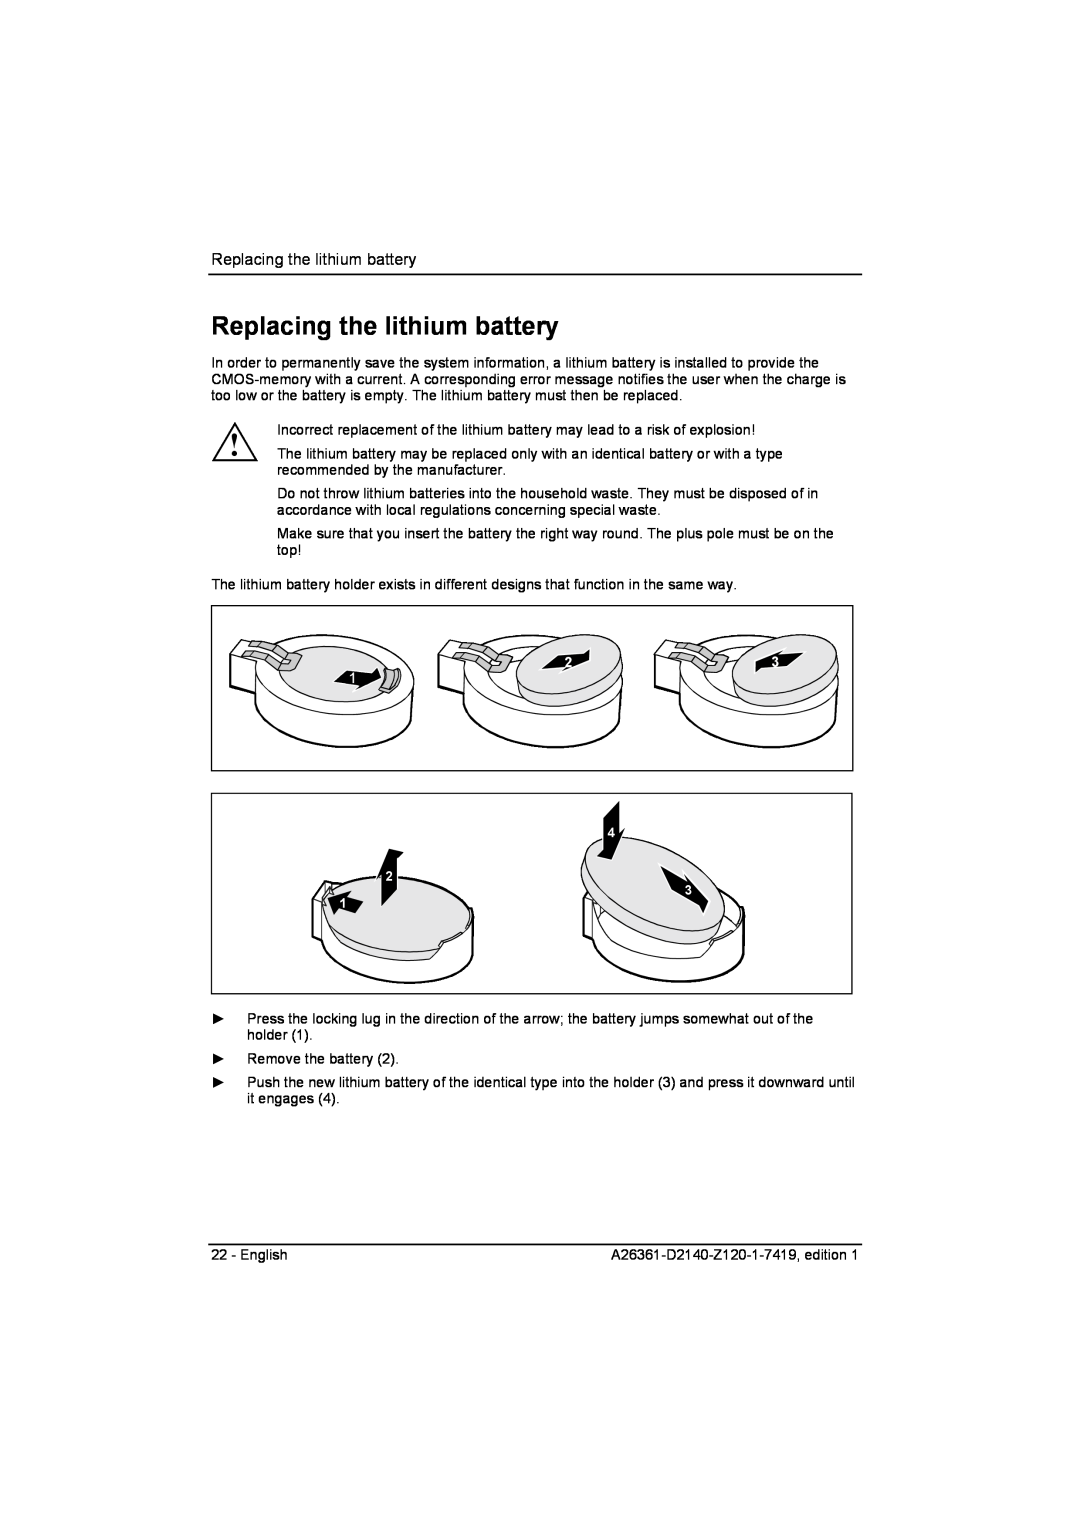 Eclipse - Fujitsu Ten D2140 technical manual Replacing the lithium battery 